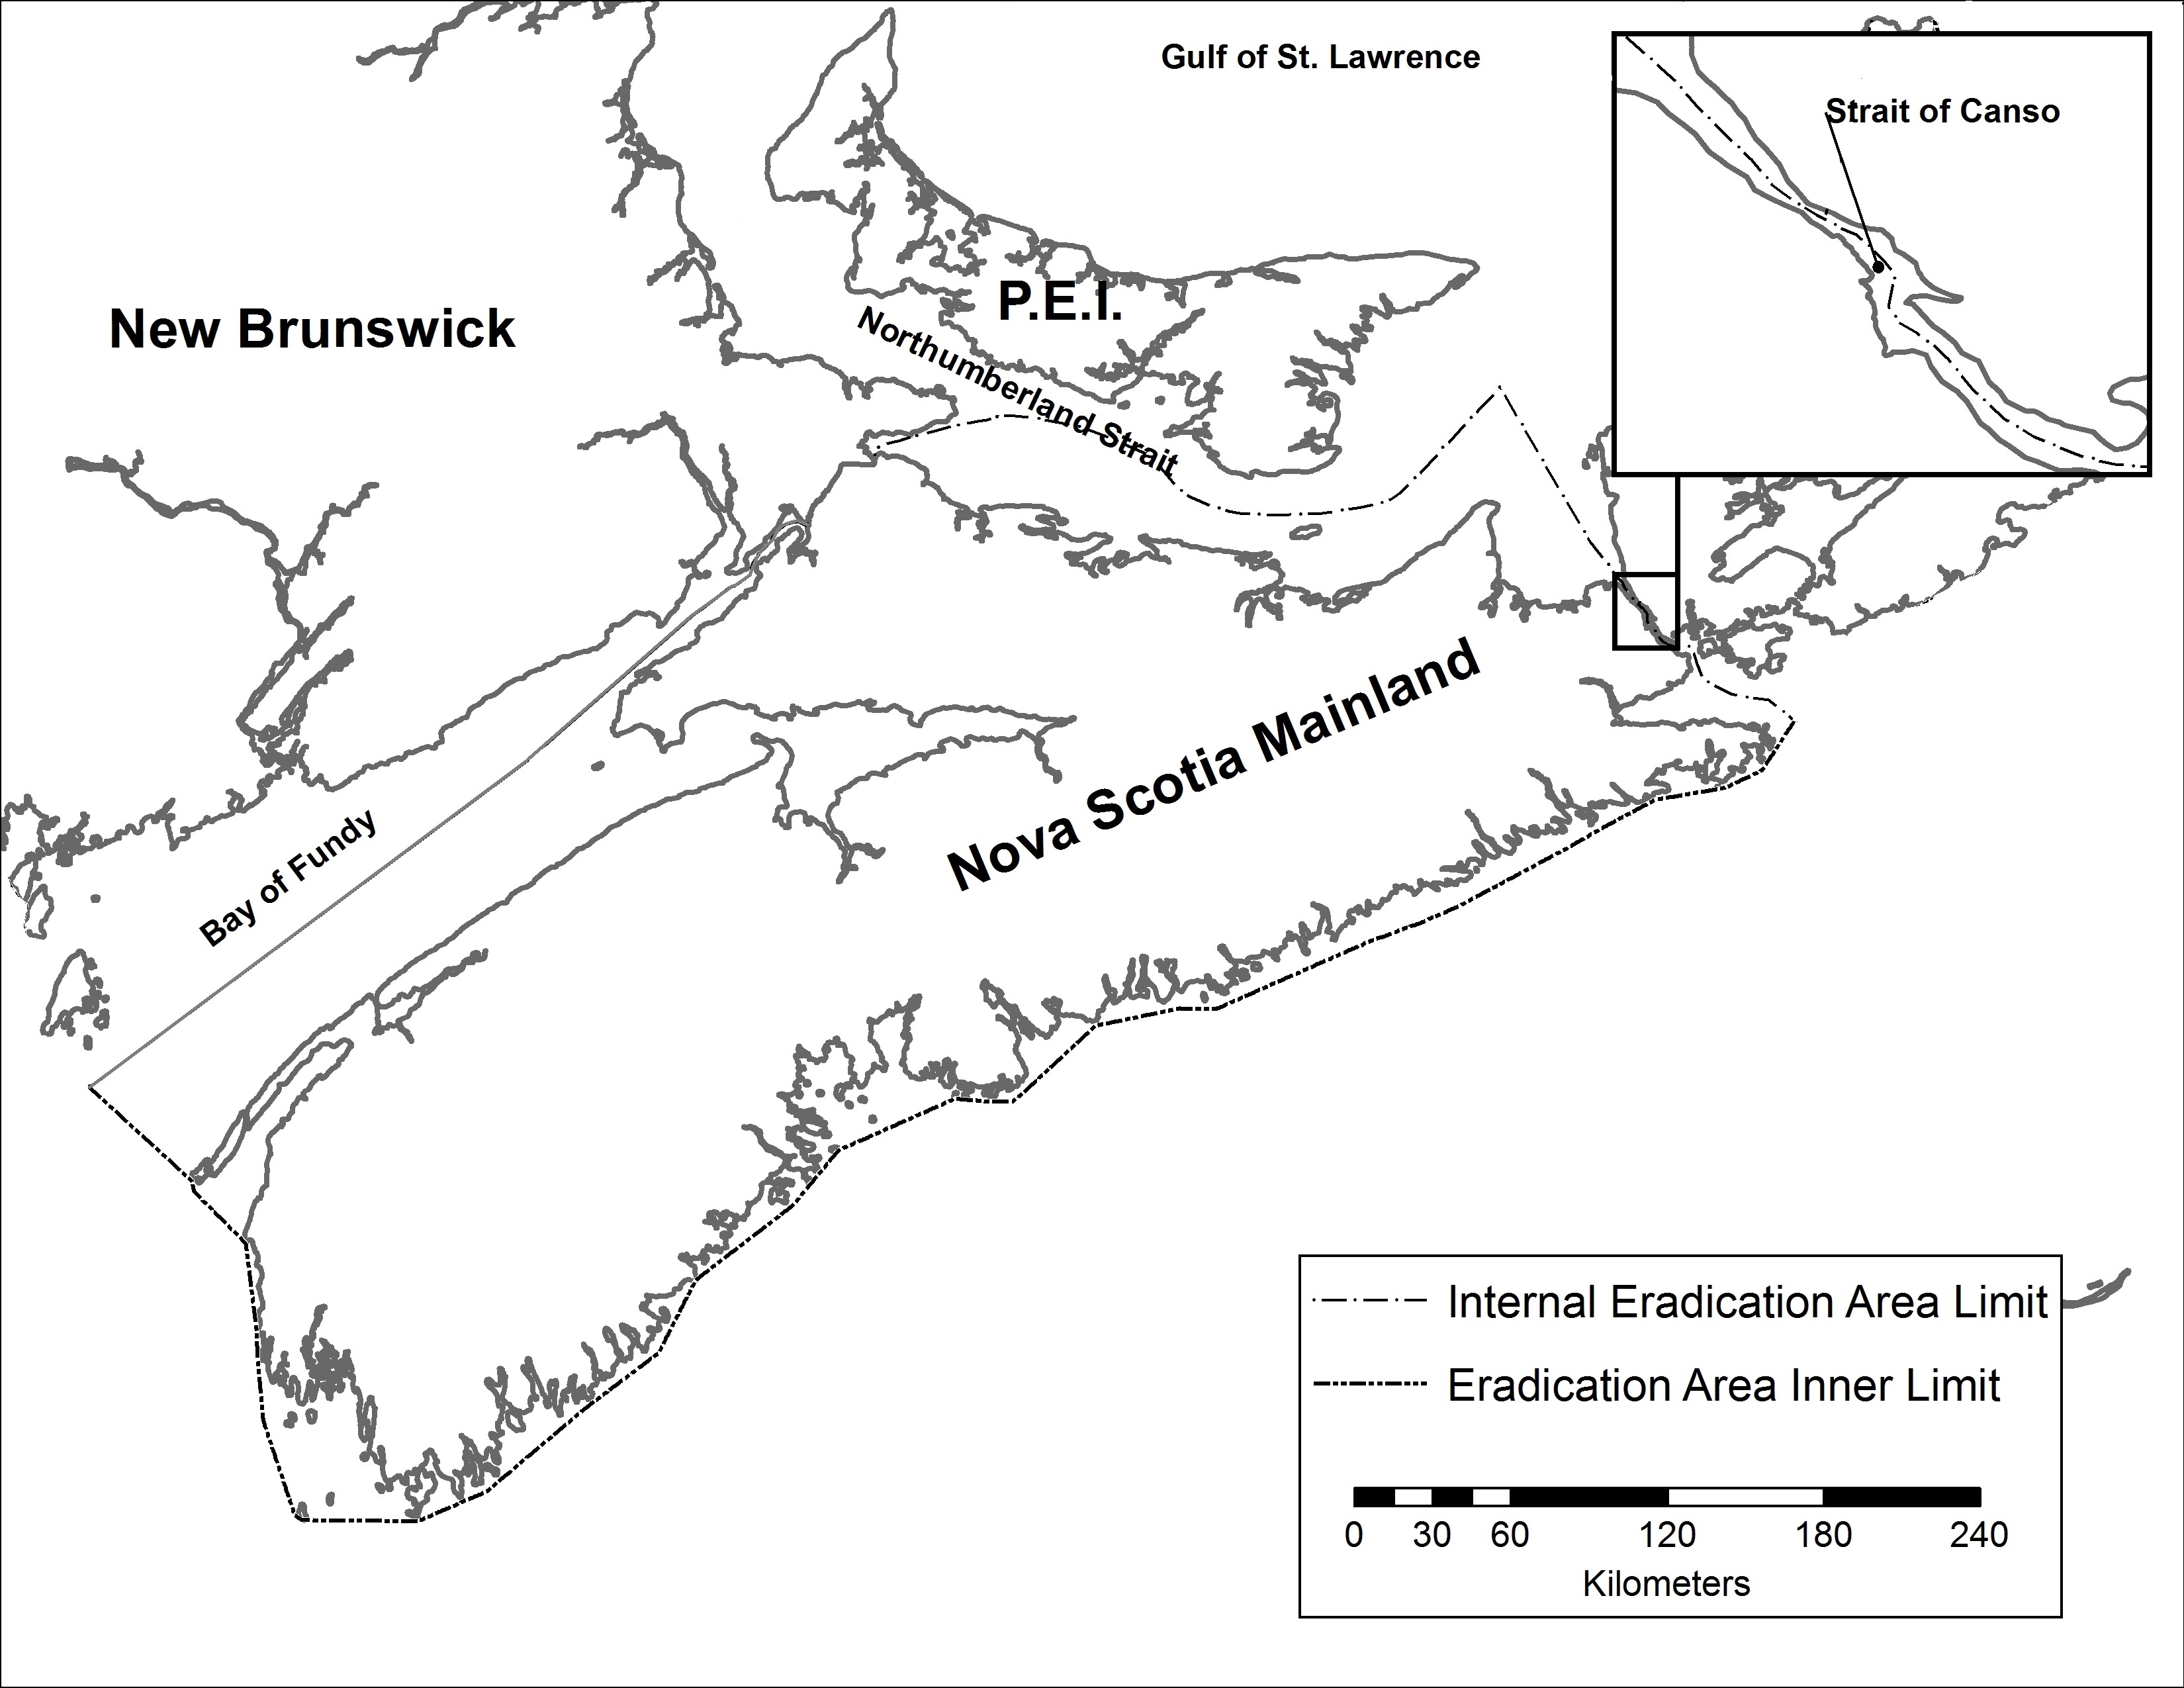 Nova Scotia Mainland map. Description follows.